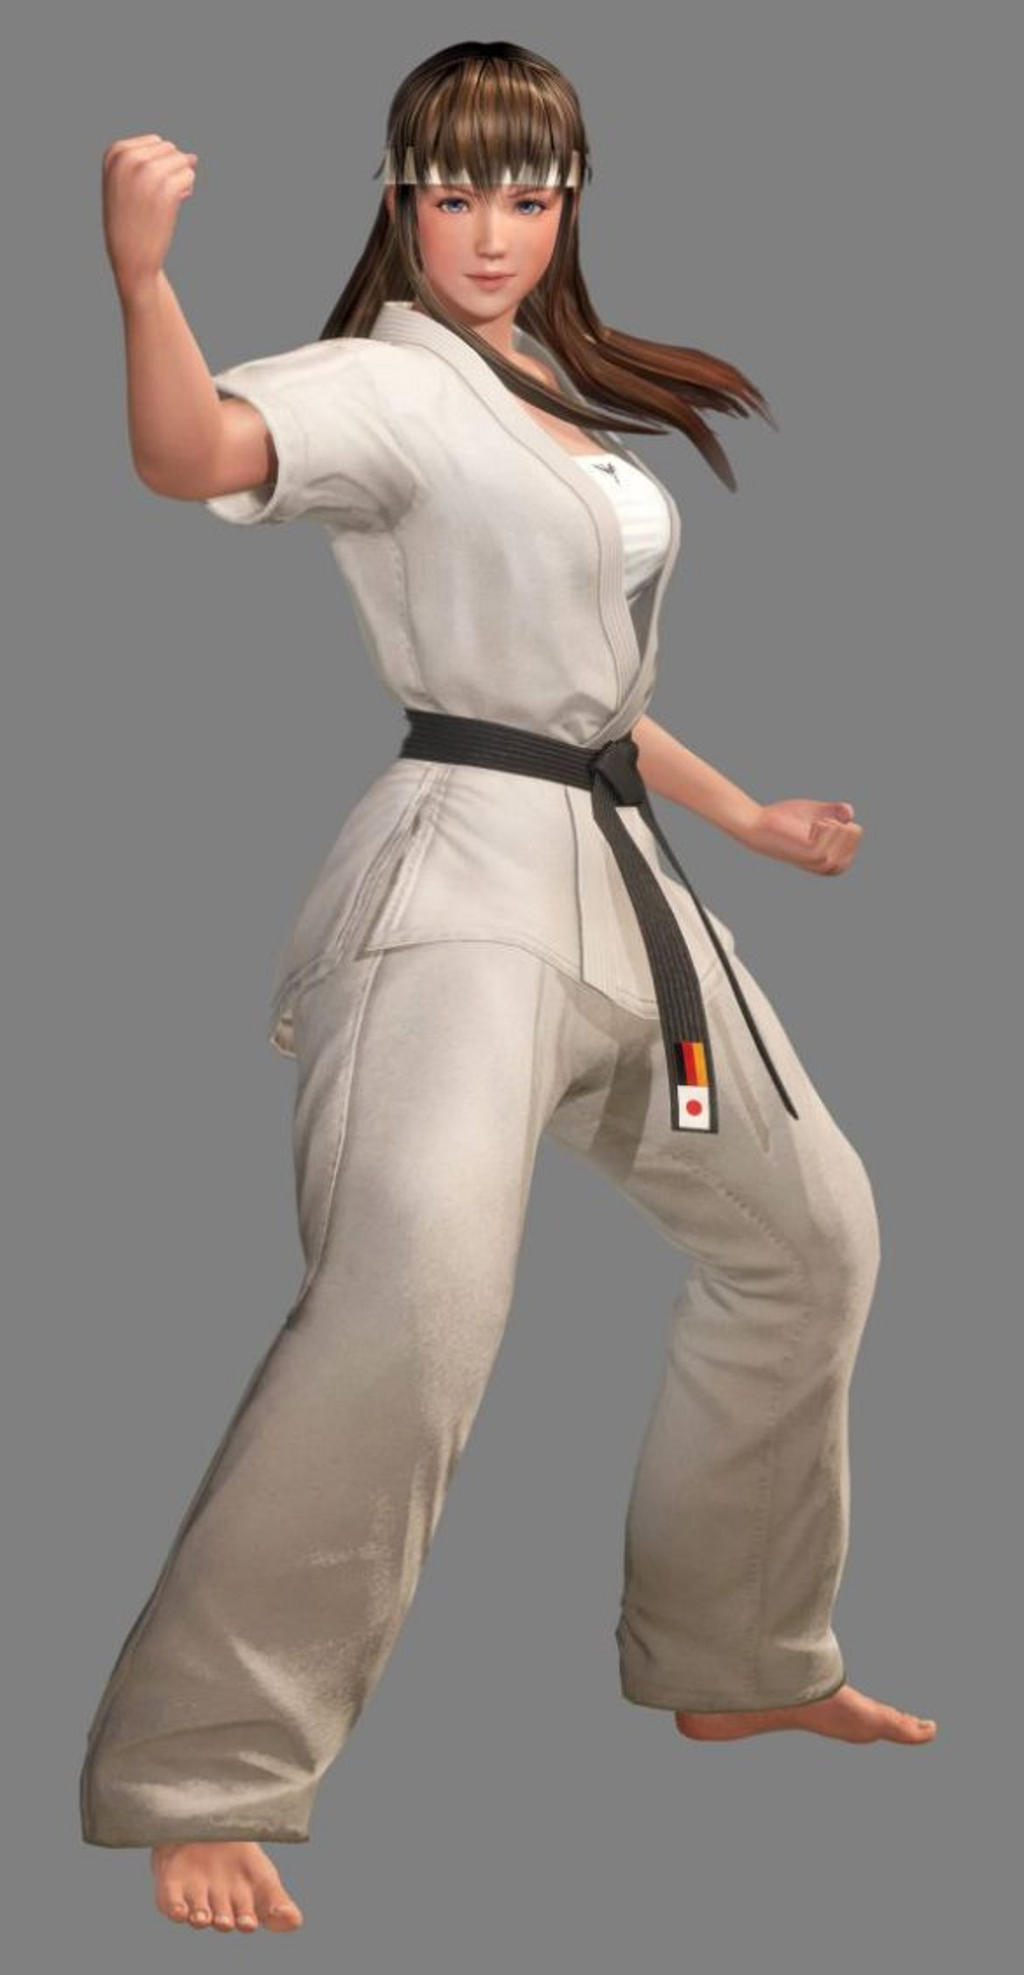 Hitomi - Karate Master 4 (DOA 6) by ChaosEmperor971 on DeviantArt